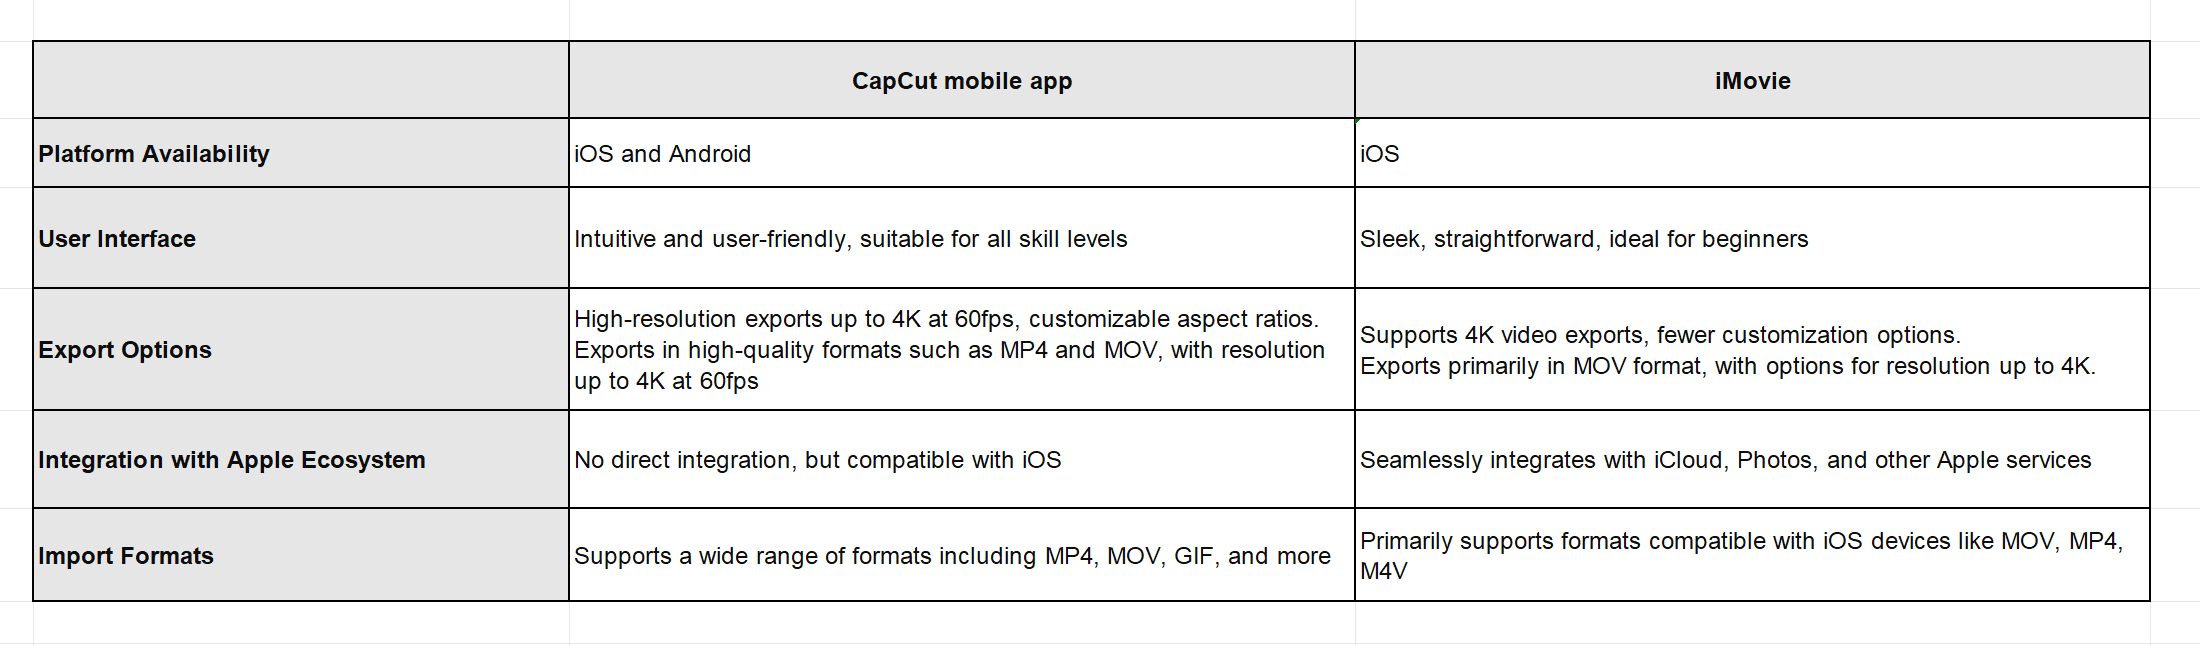 CapCut vs iMovie on iPhone: Detailed comparison